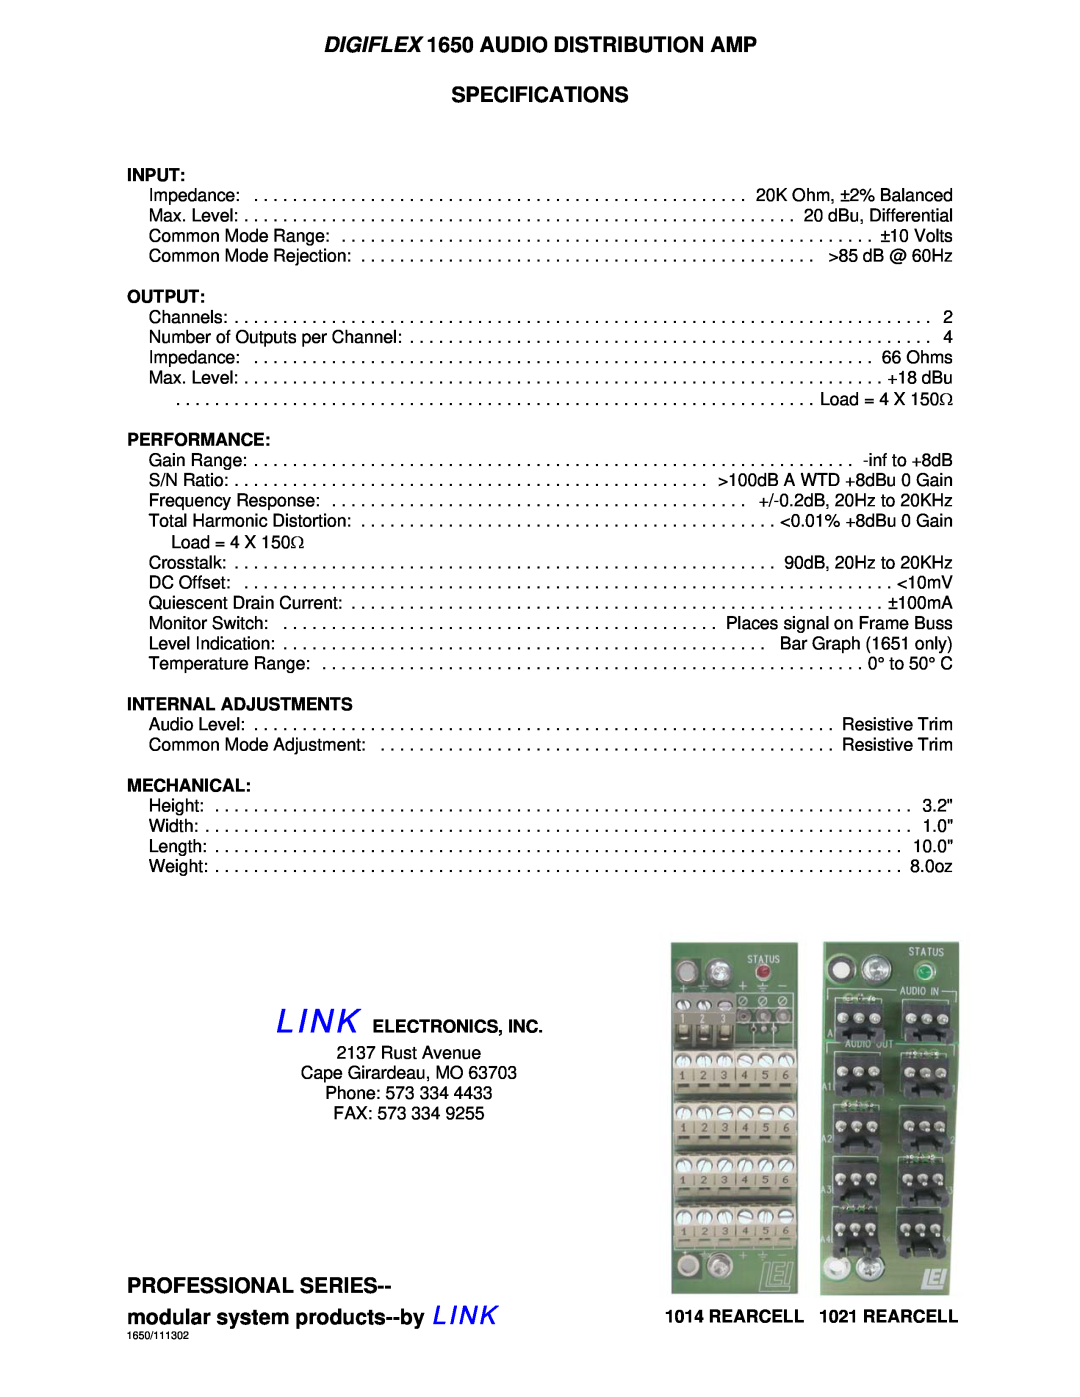 Link electronic 1650 warranty Input, Output, Performance, Internal Adjustments, Mechanical, Link Electronics, Inc 